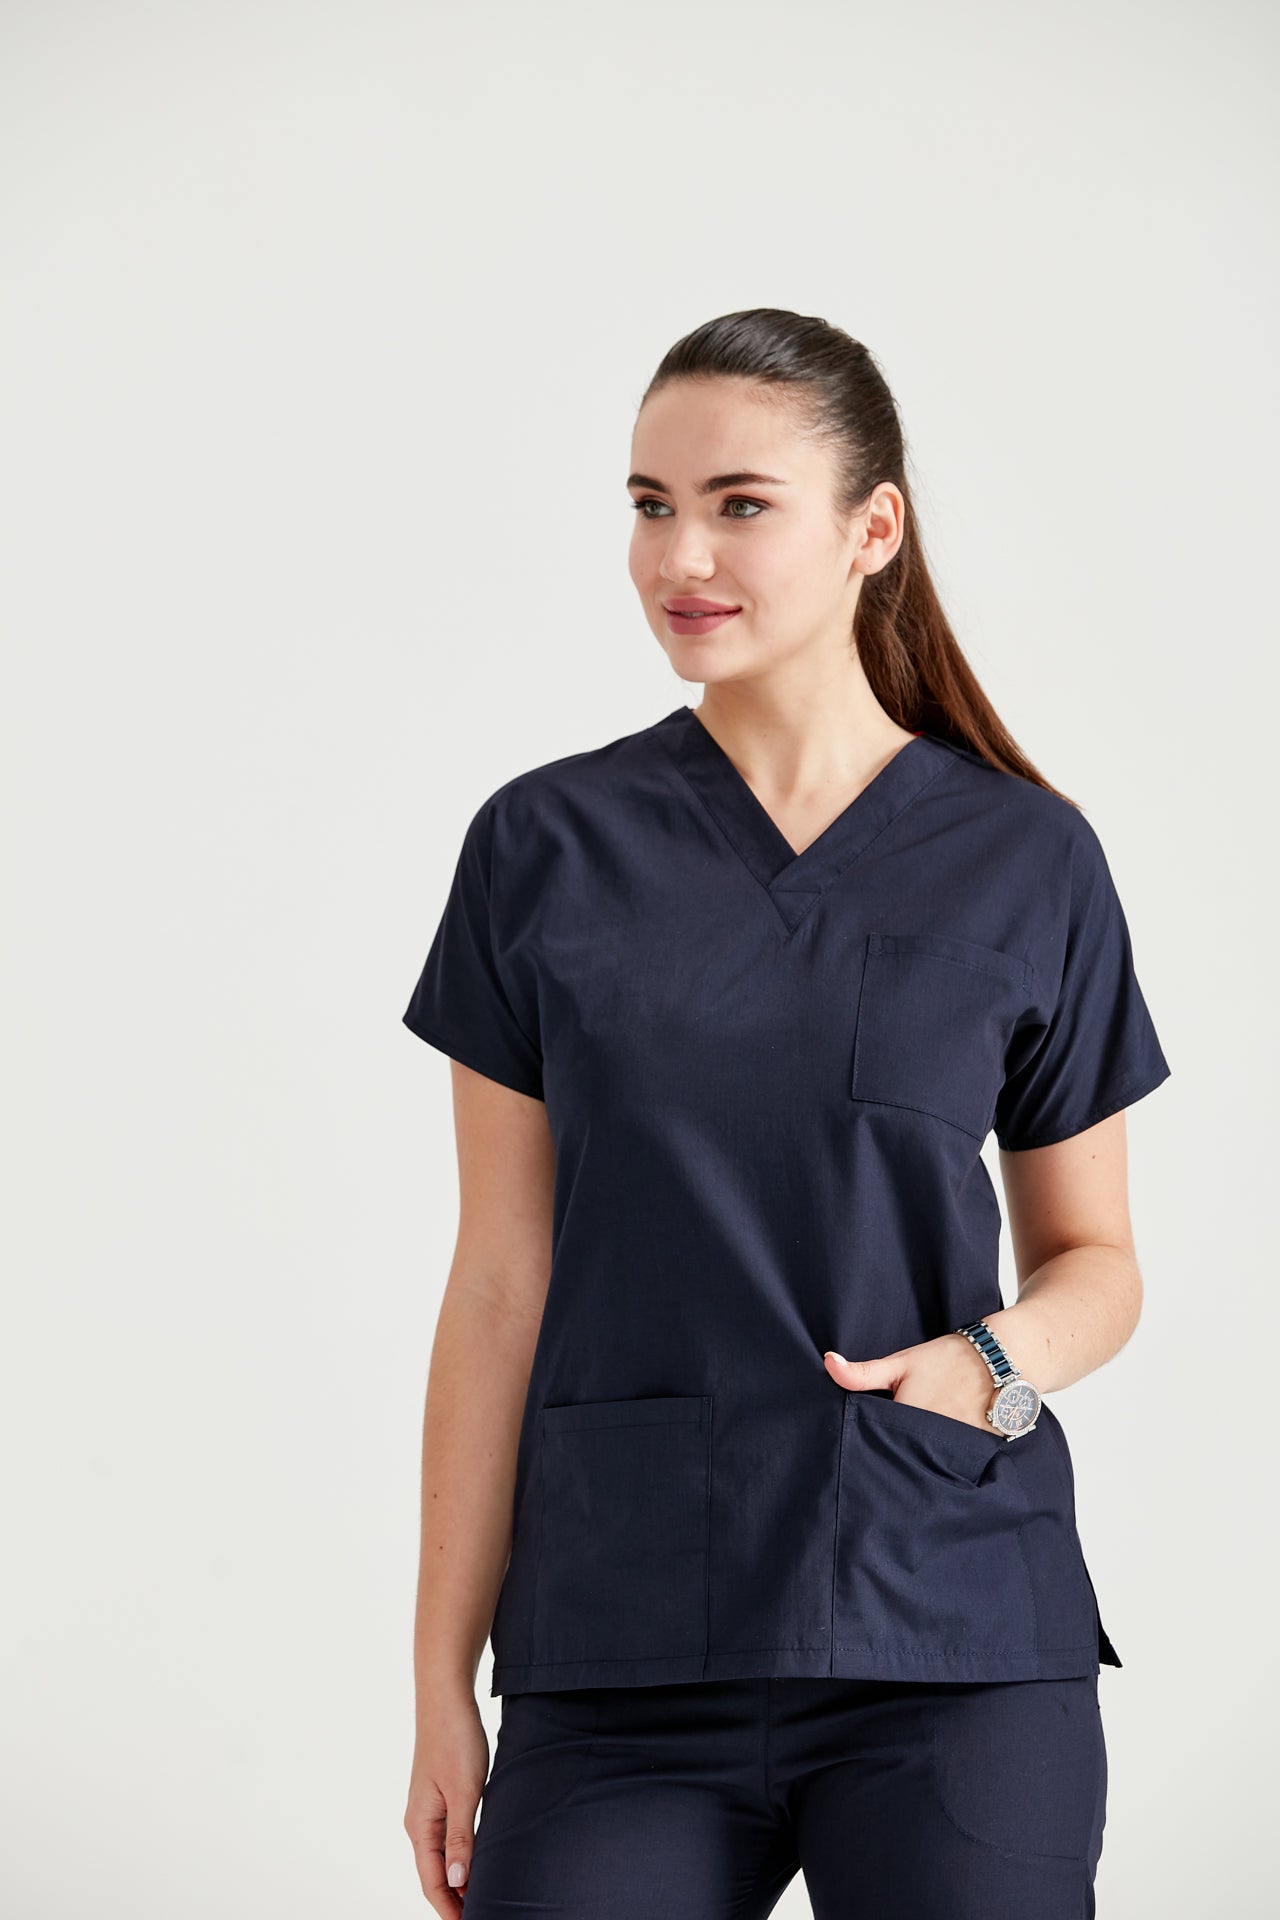 Asistenta medicala imbracata in costum medical de dama din elastan, Bluemarin, vedere din fata